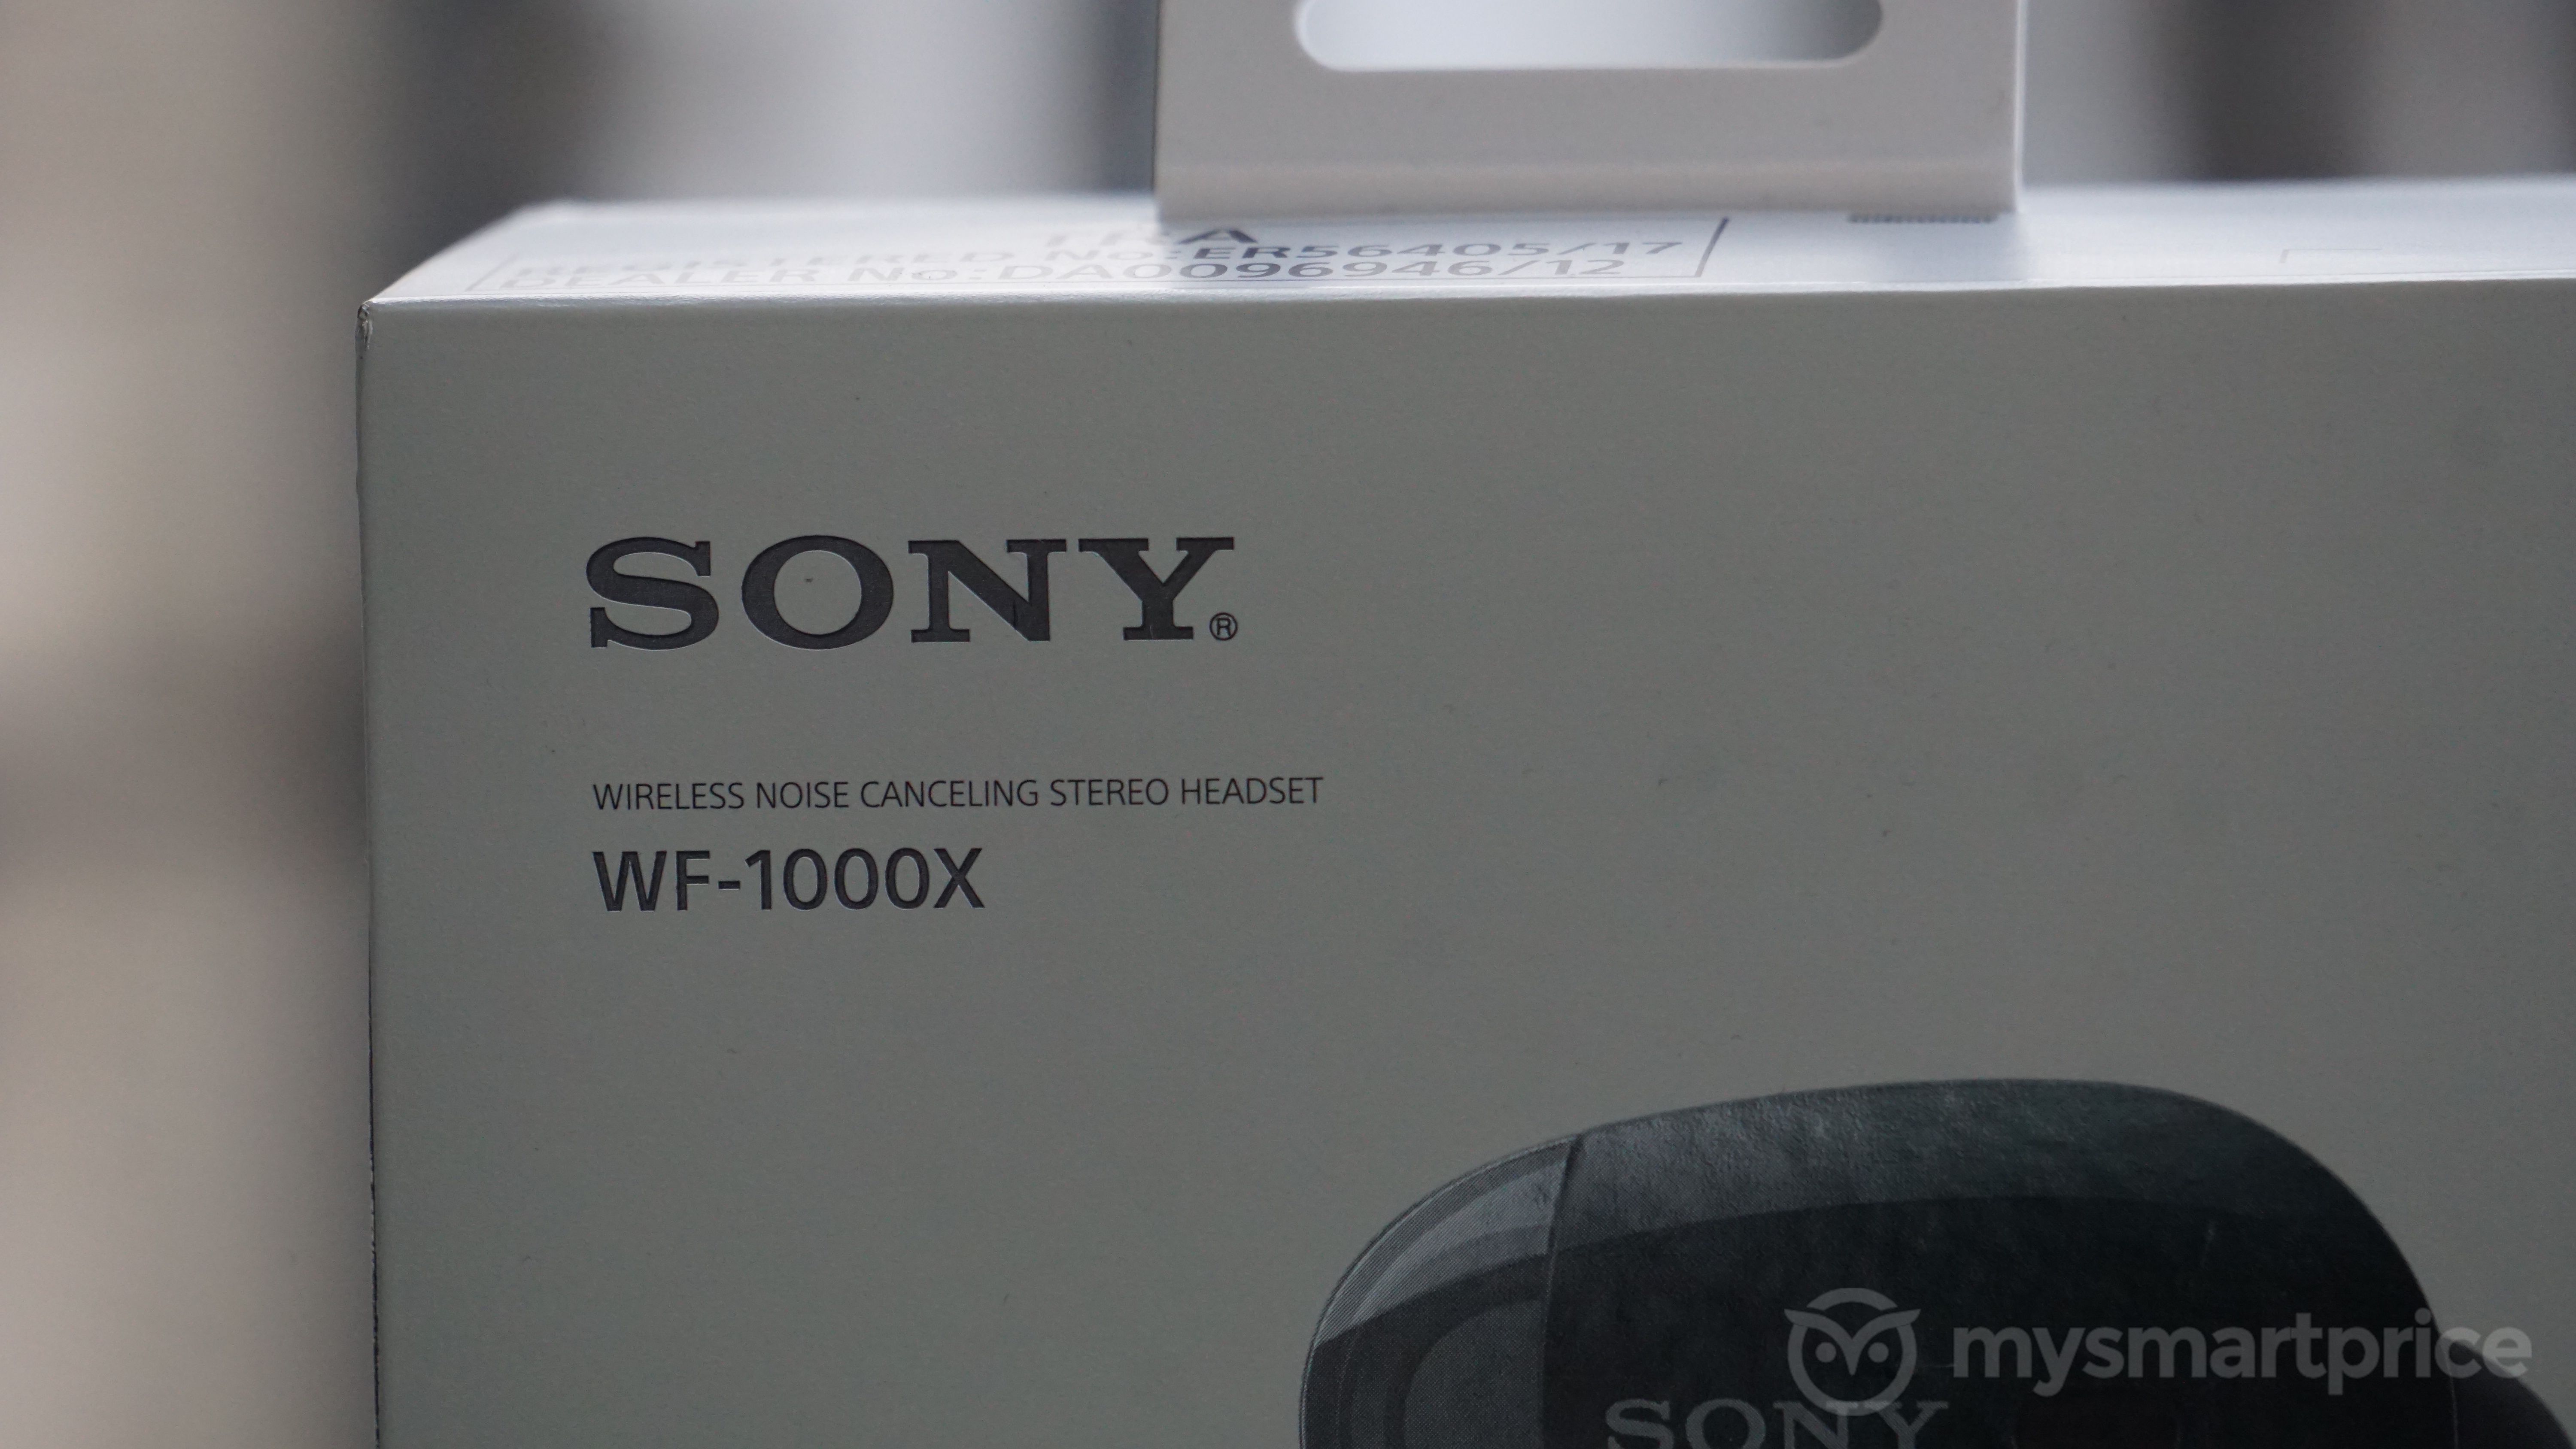 Sony WF-1000X insides matter